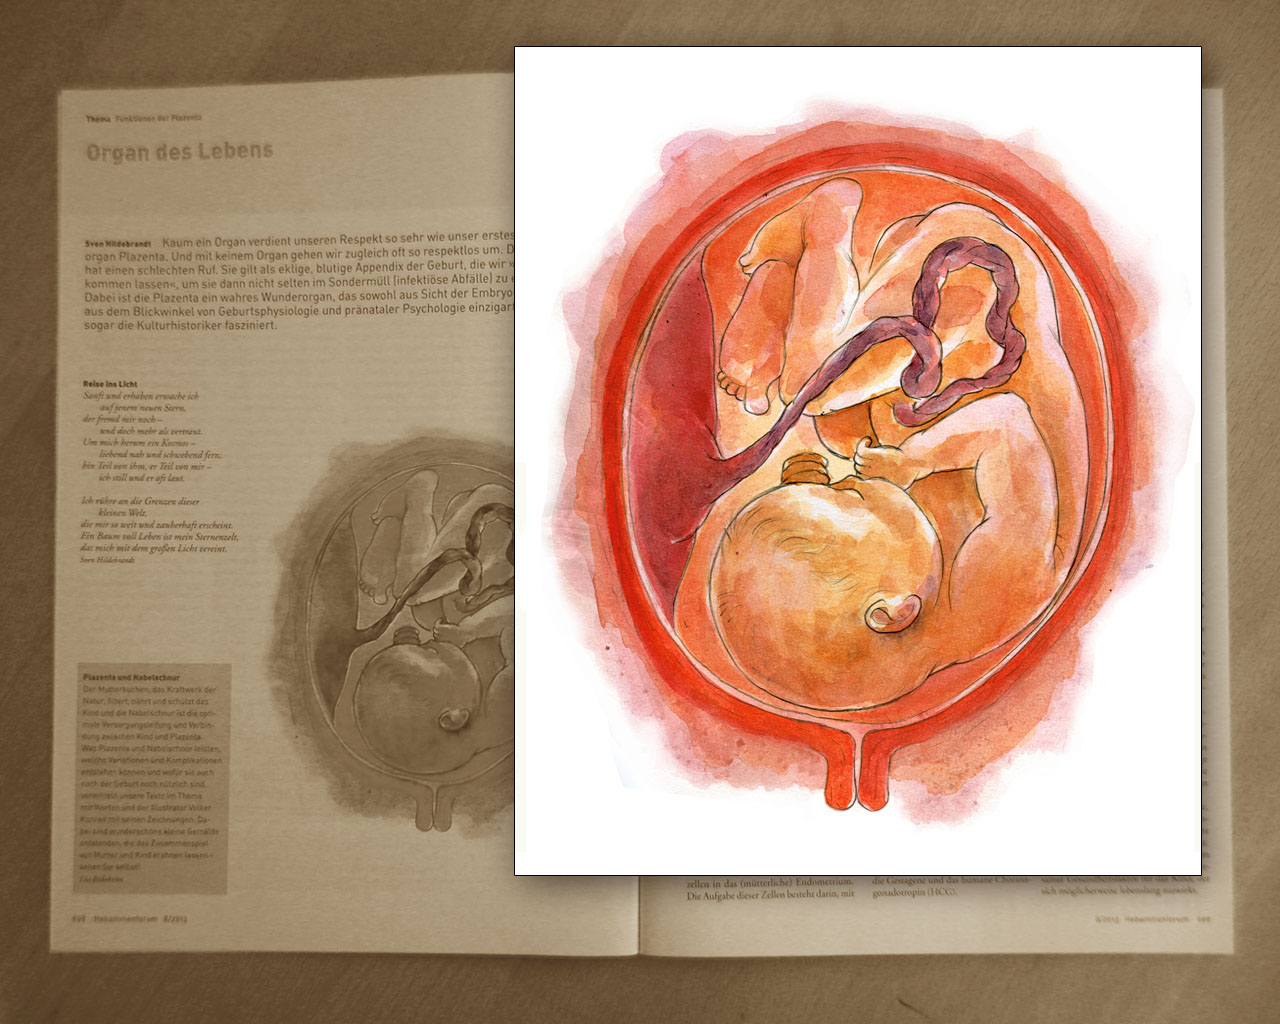 Child in the womb - Kind in Gebärmutter